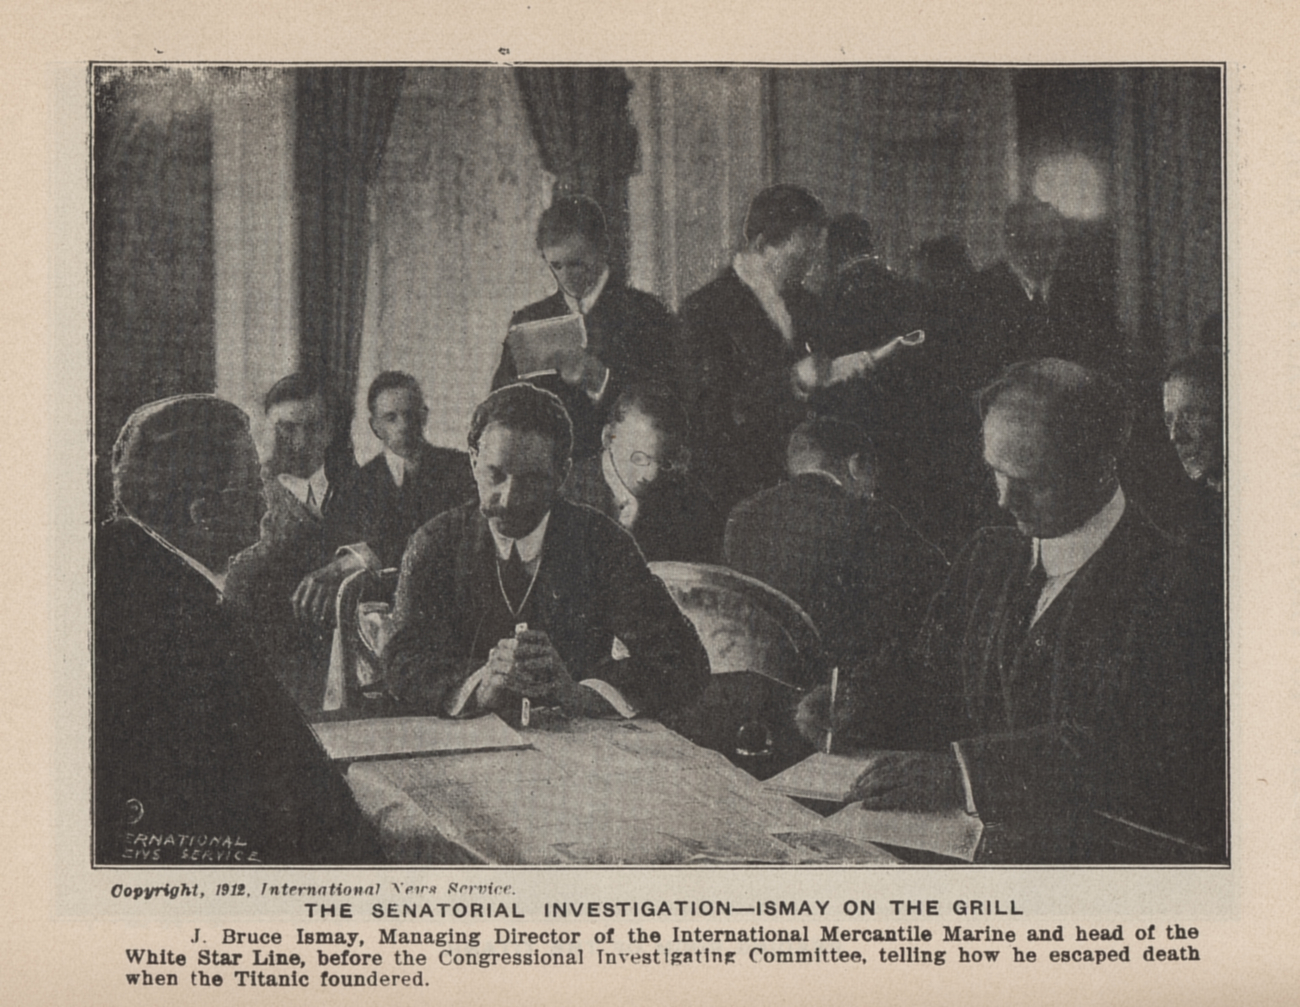 The Senatorial Investigation - Ismay on the grillIn: Marshall, Logan 1912